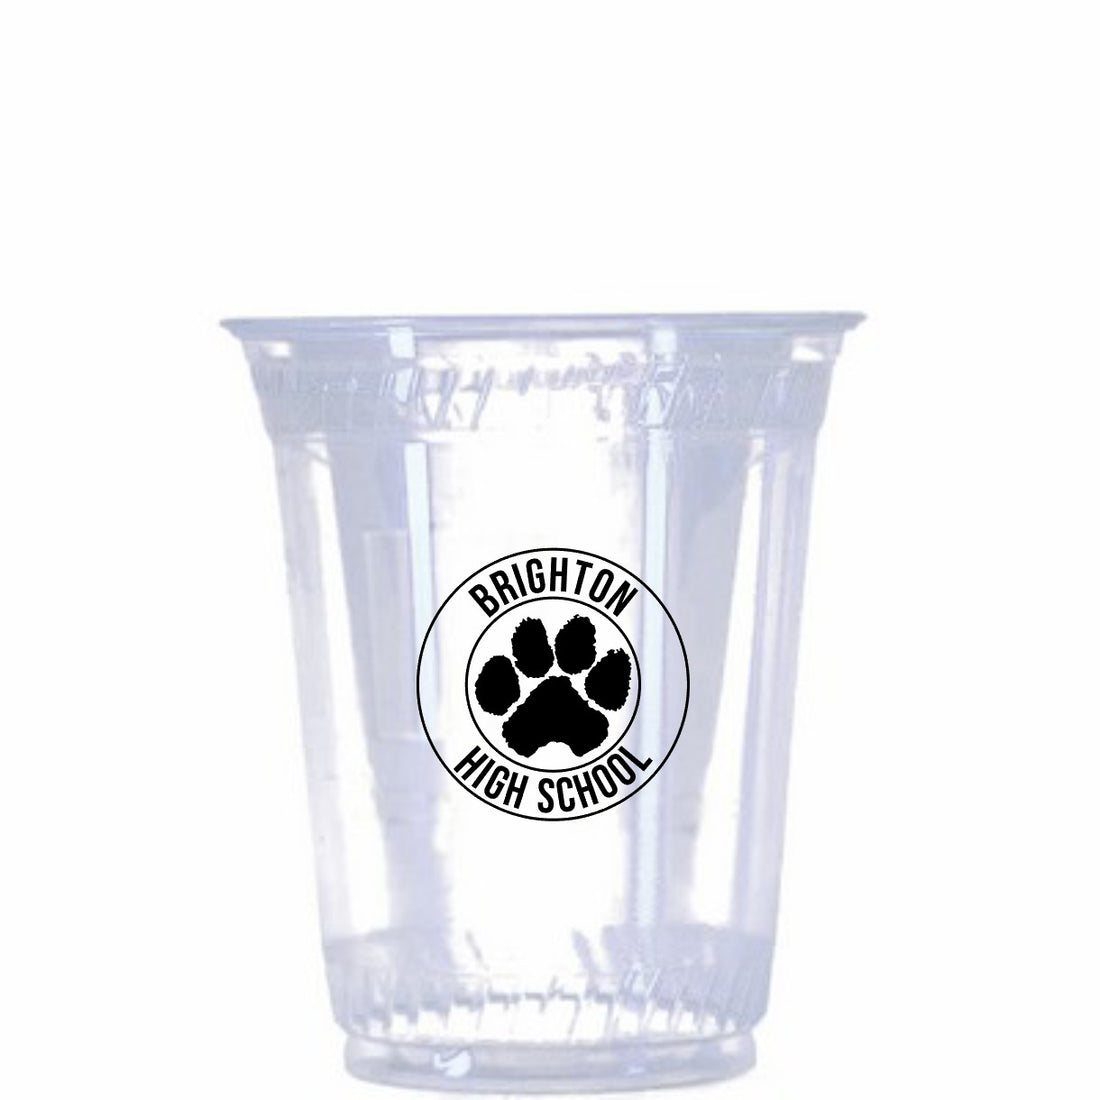 BHS Plastic Cup 12 ounces - set of 50